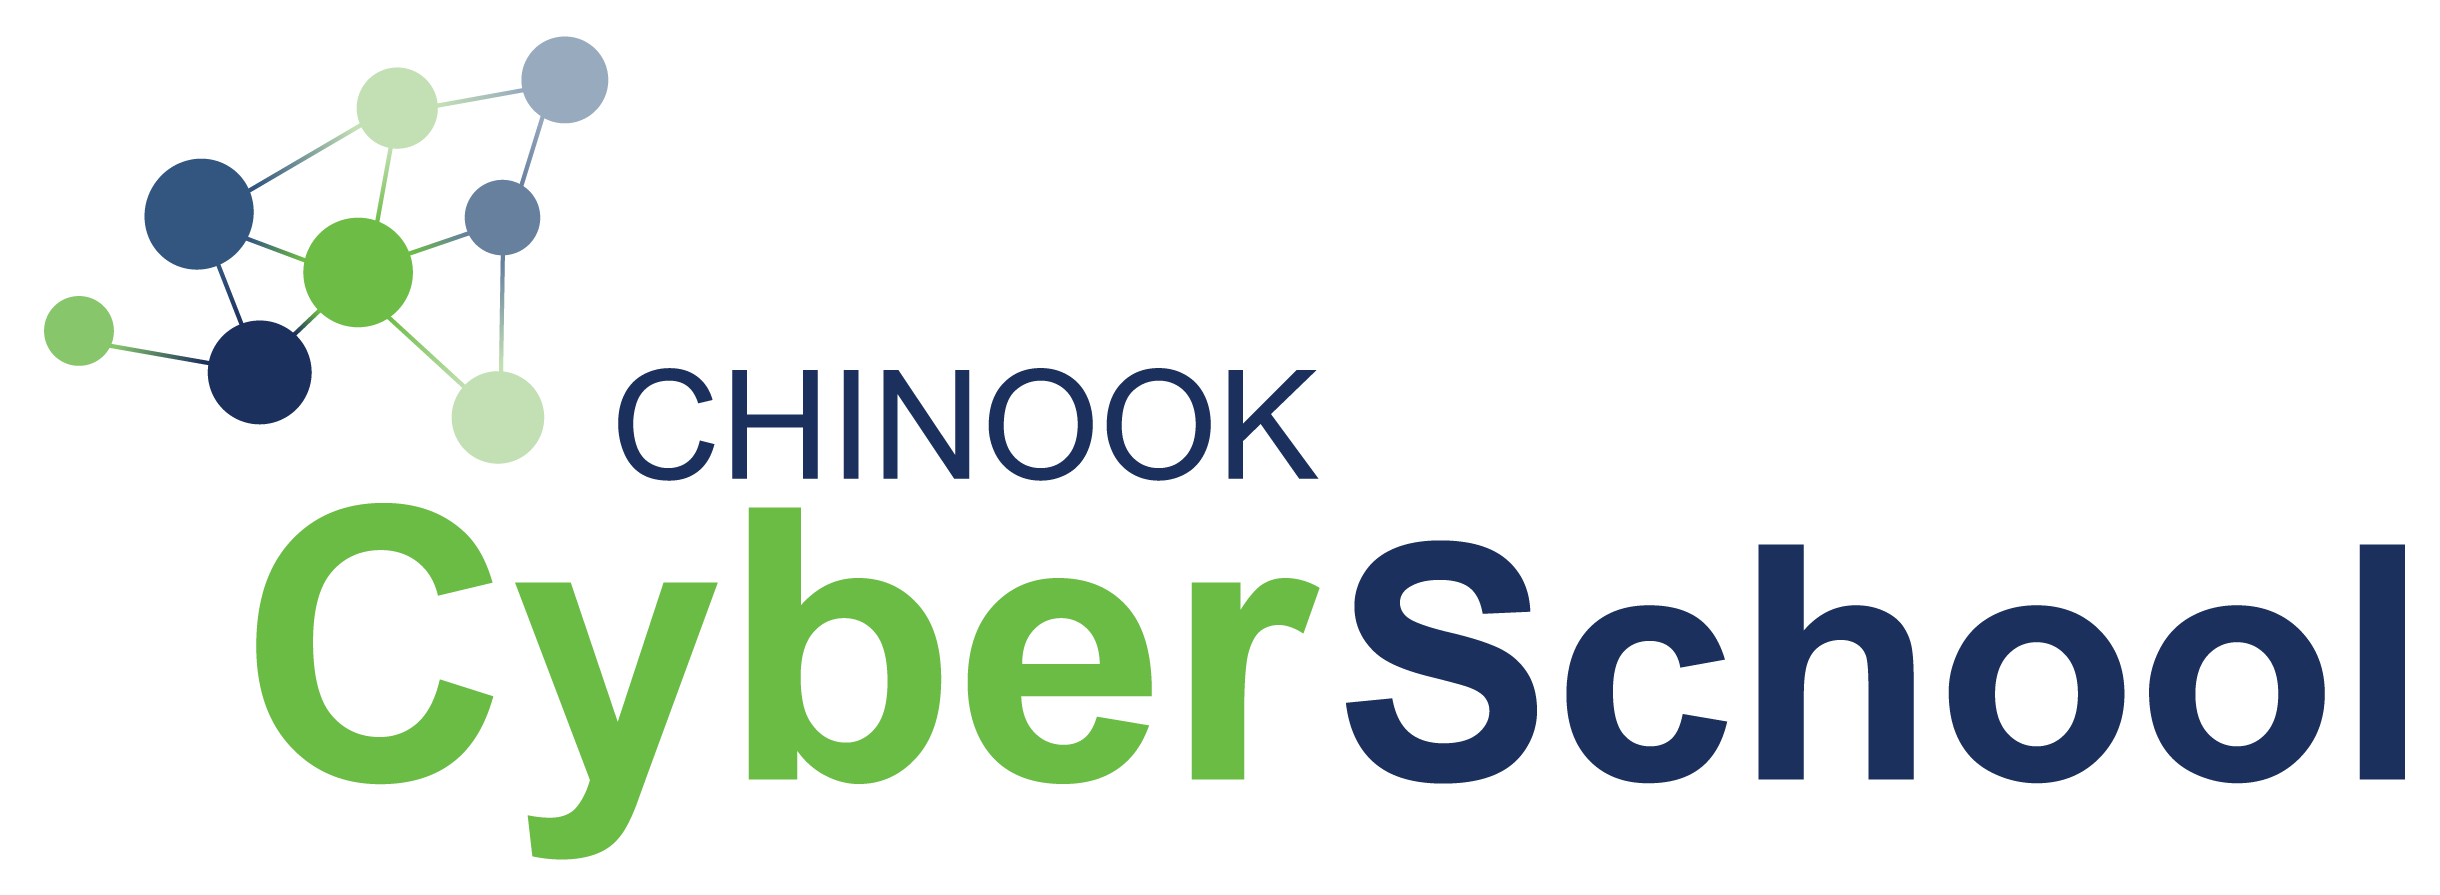 Chinook Cyber School logo